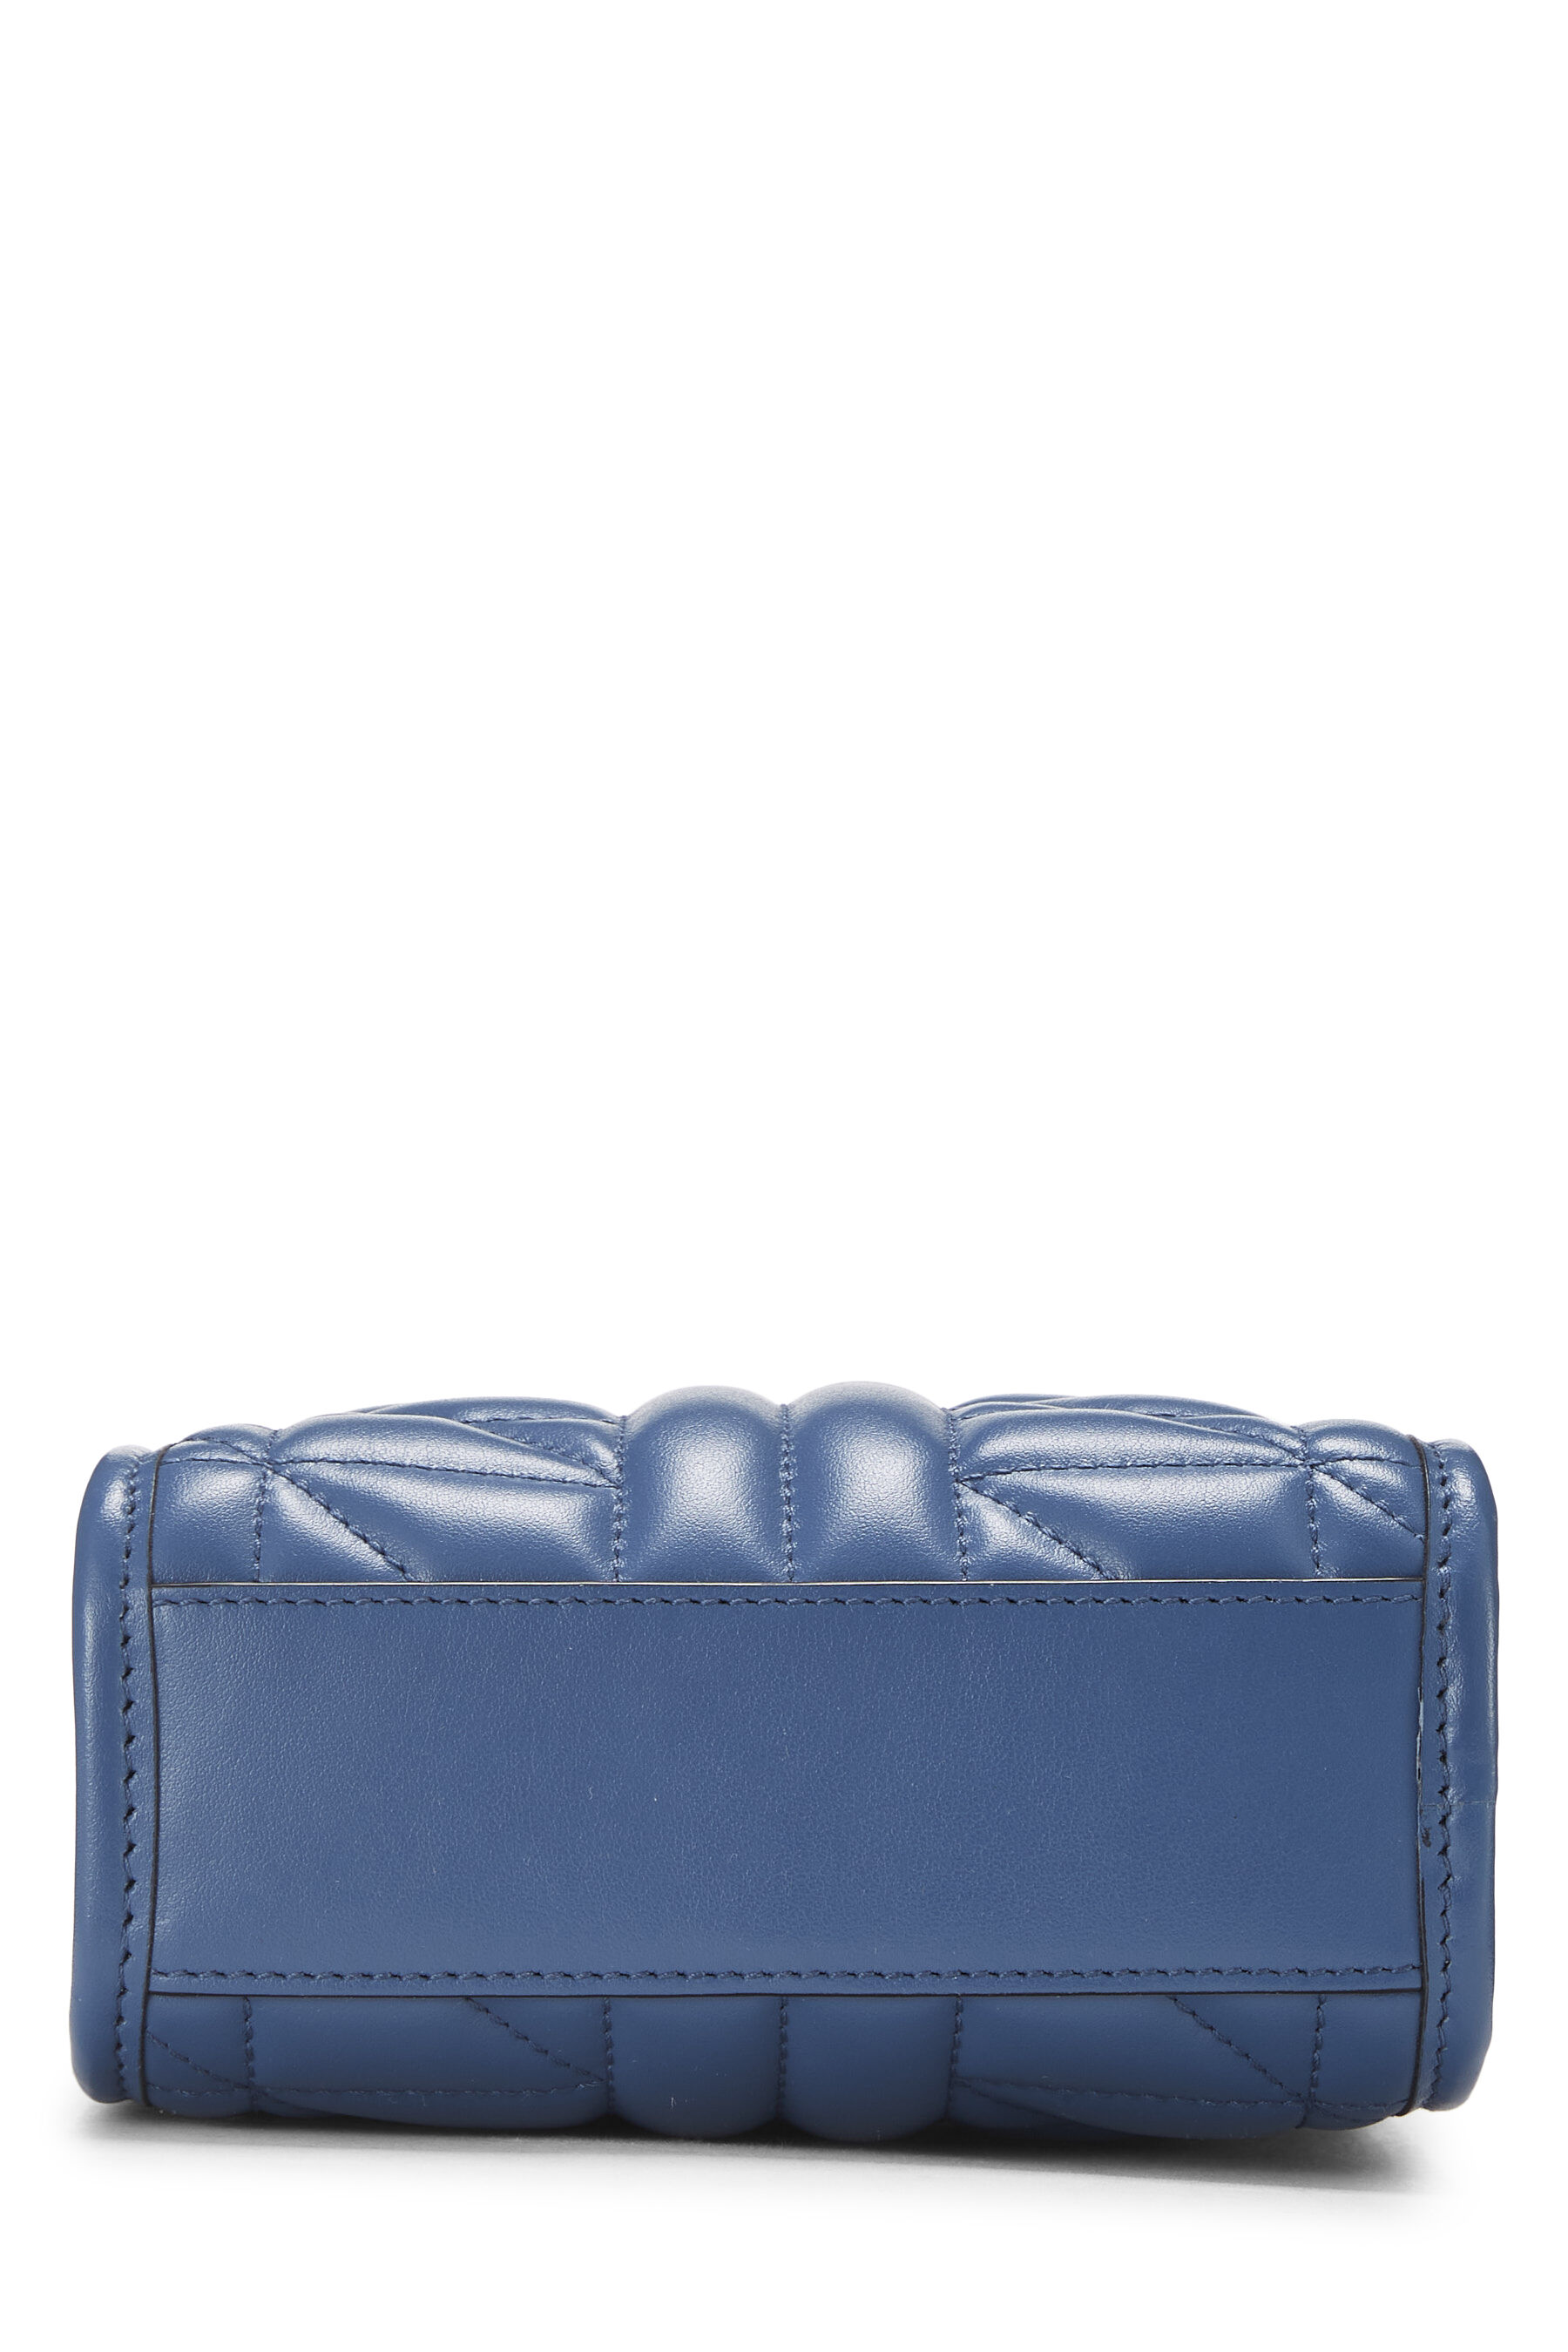 Blue Leather GG Marmont Convertible Shoulder Bag